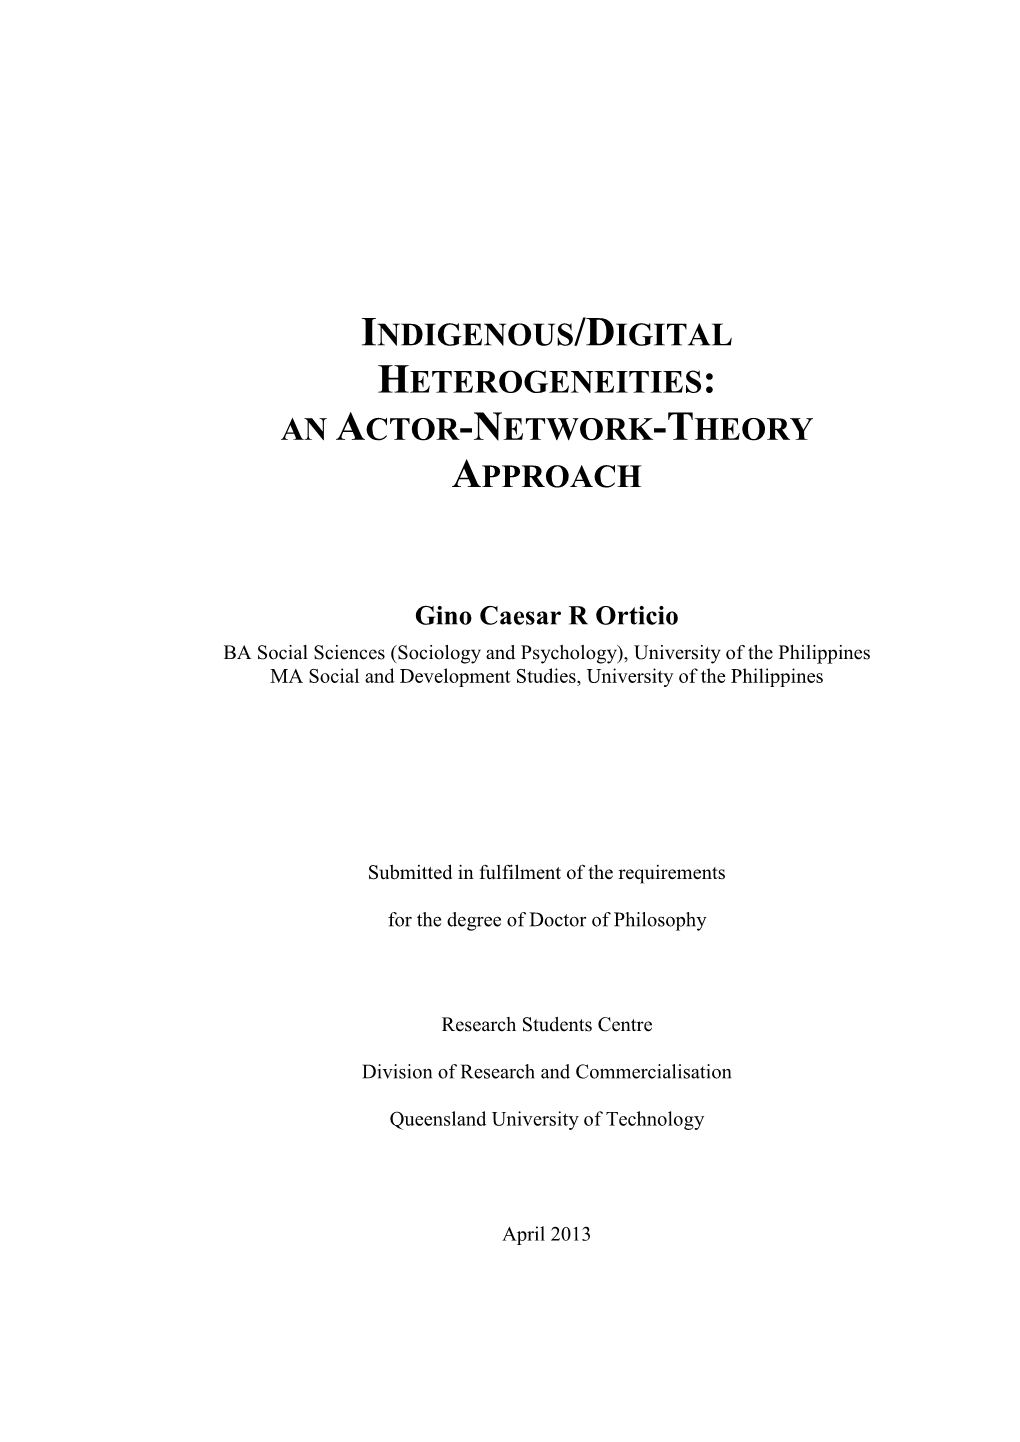 Indigenous/Digital Heterogeneities: an Actor-Network-Theory Approach